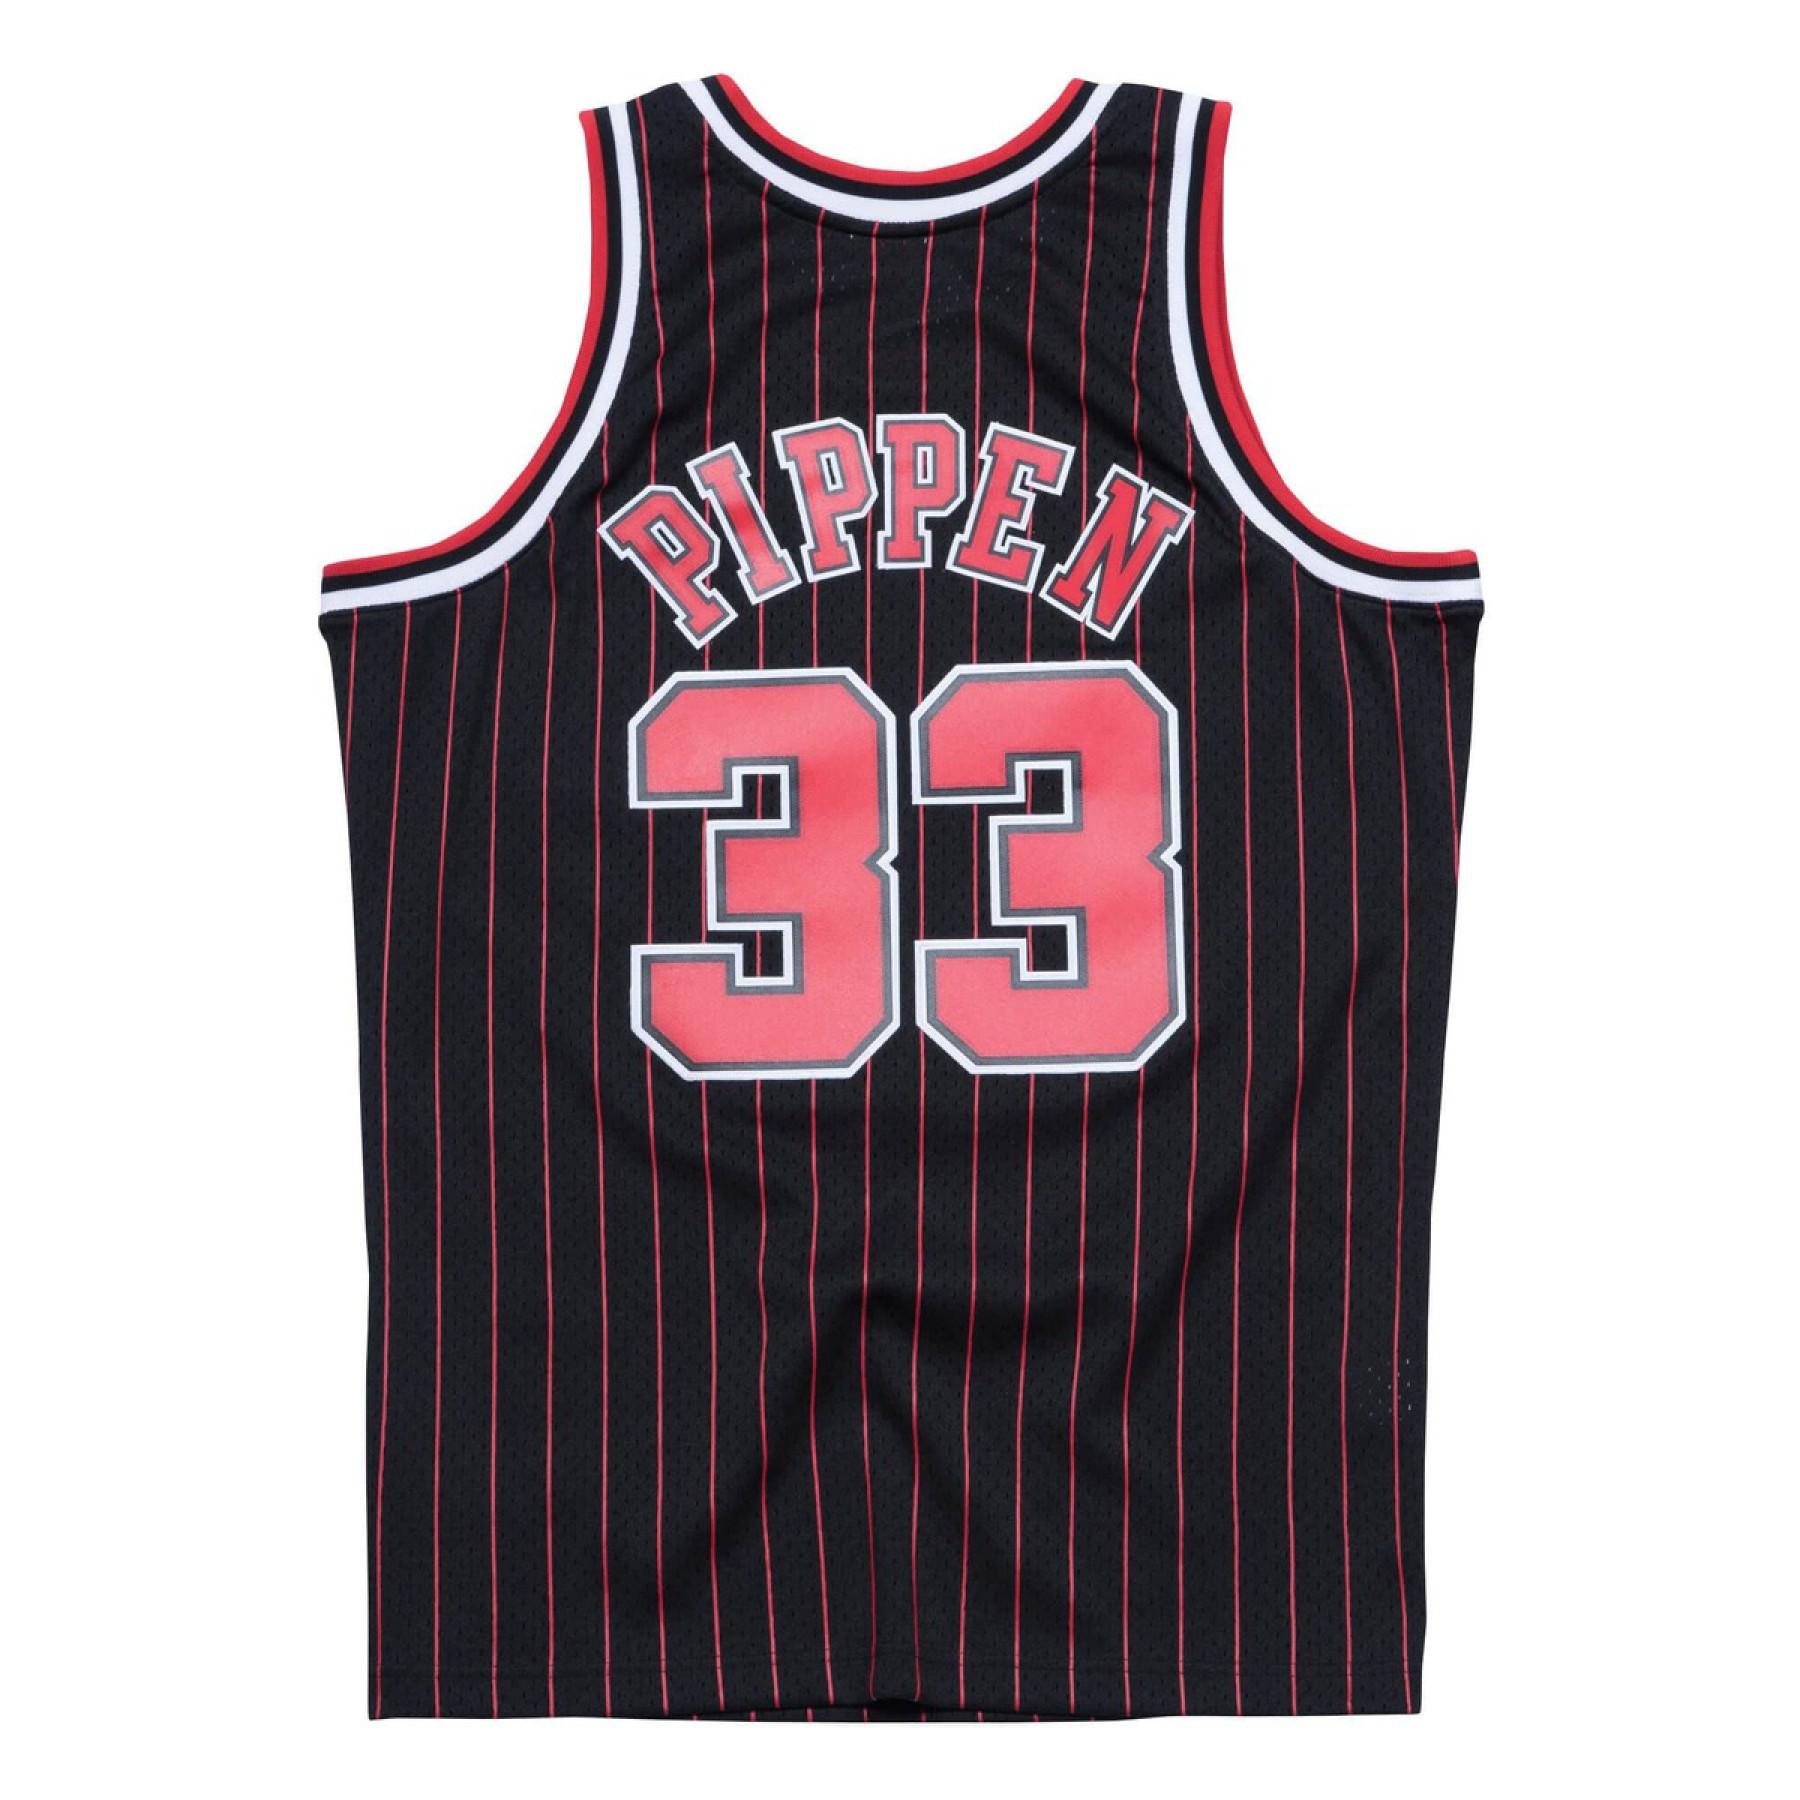 Camisola Chicago Bulls Alternate 1995-96 Scottie Pippen NBA